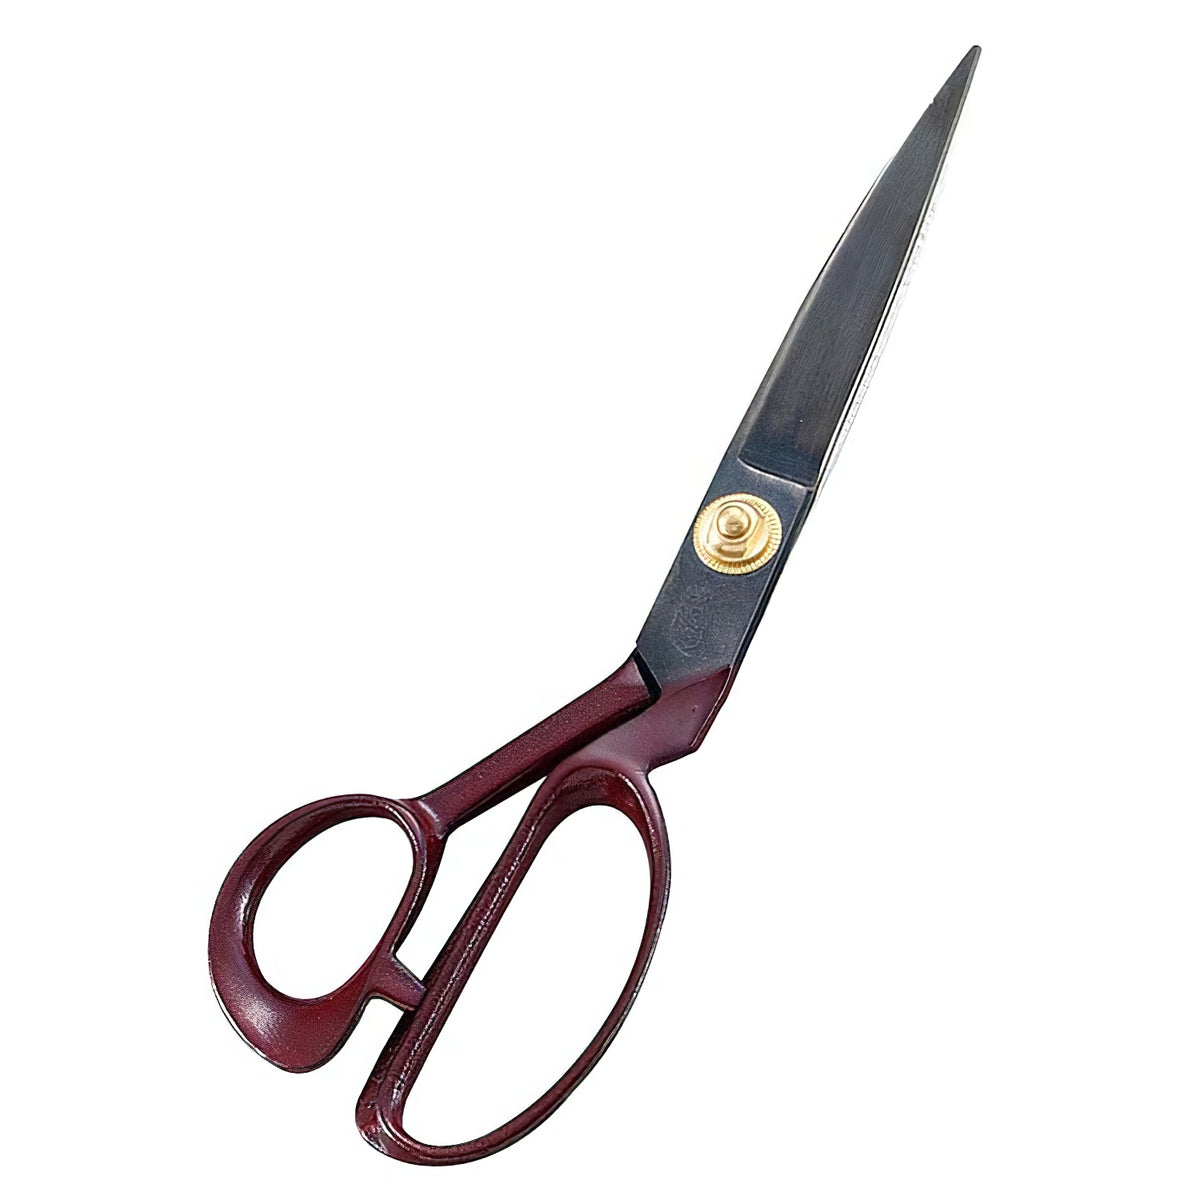 Seitaro Iron Sewing Scissors